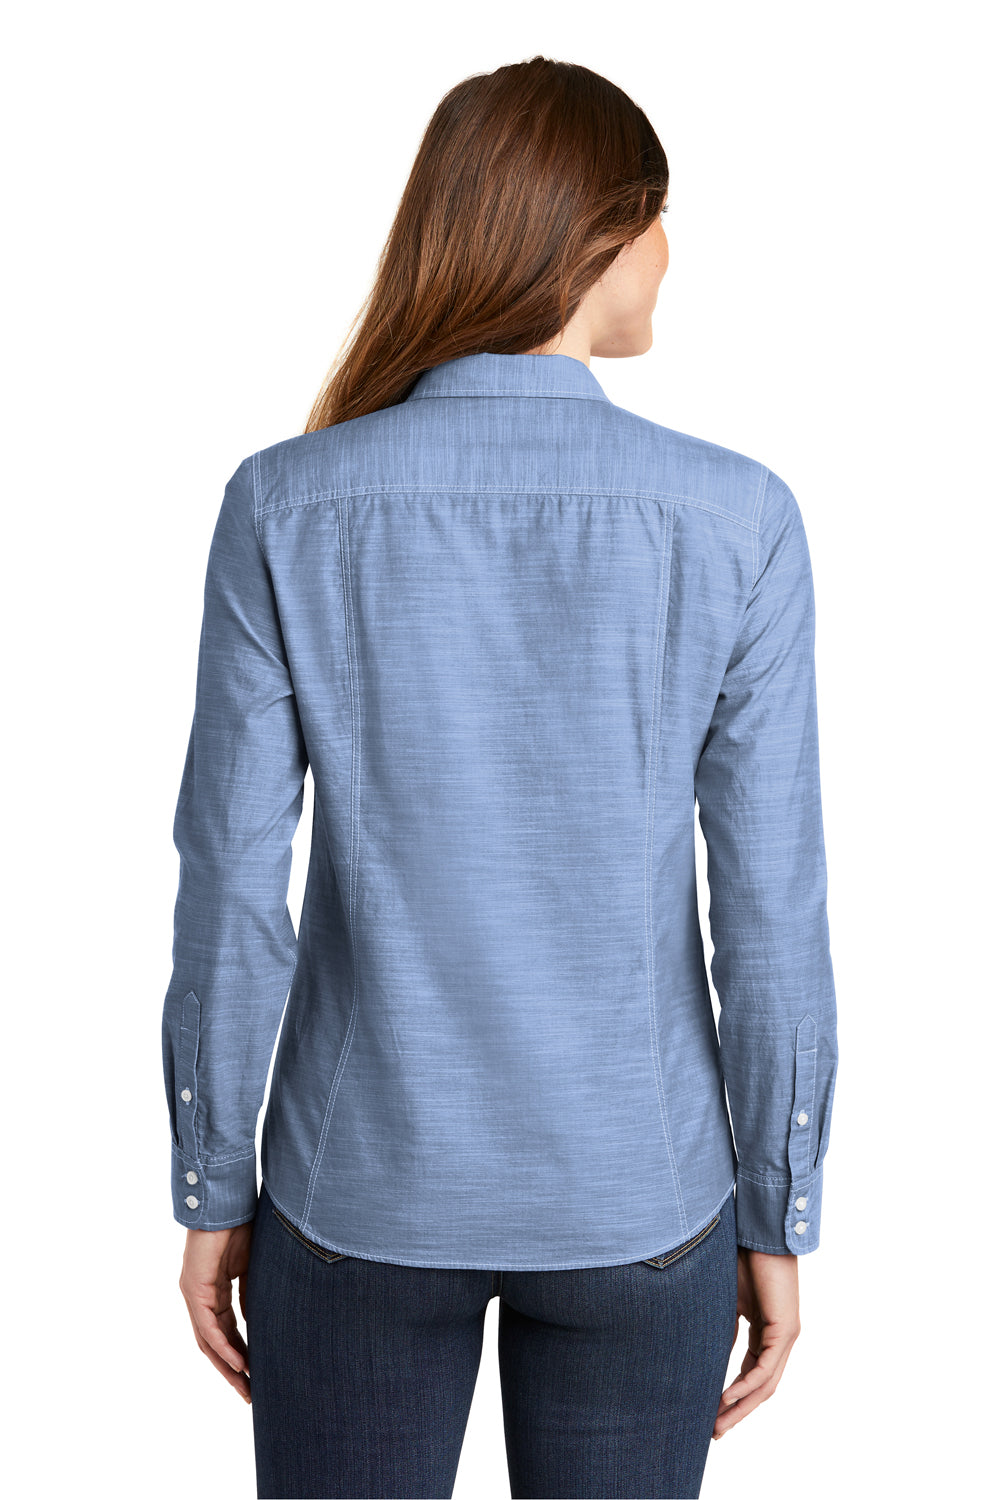 Port Authority LW380 Womens Slub Chambray Long Sleeve Button Down Shirt w/ Double Pockets Blue Back